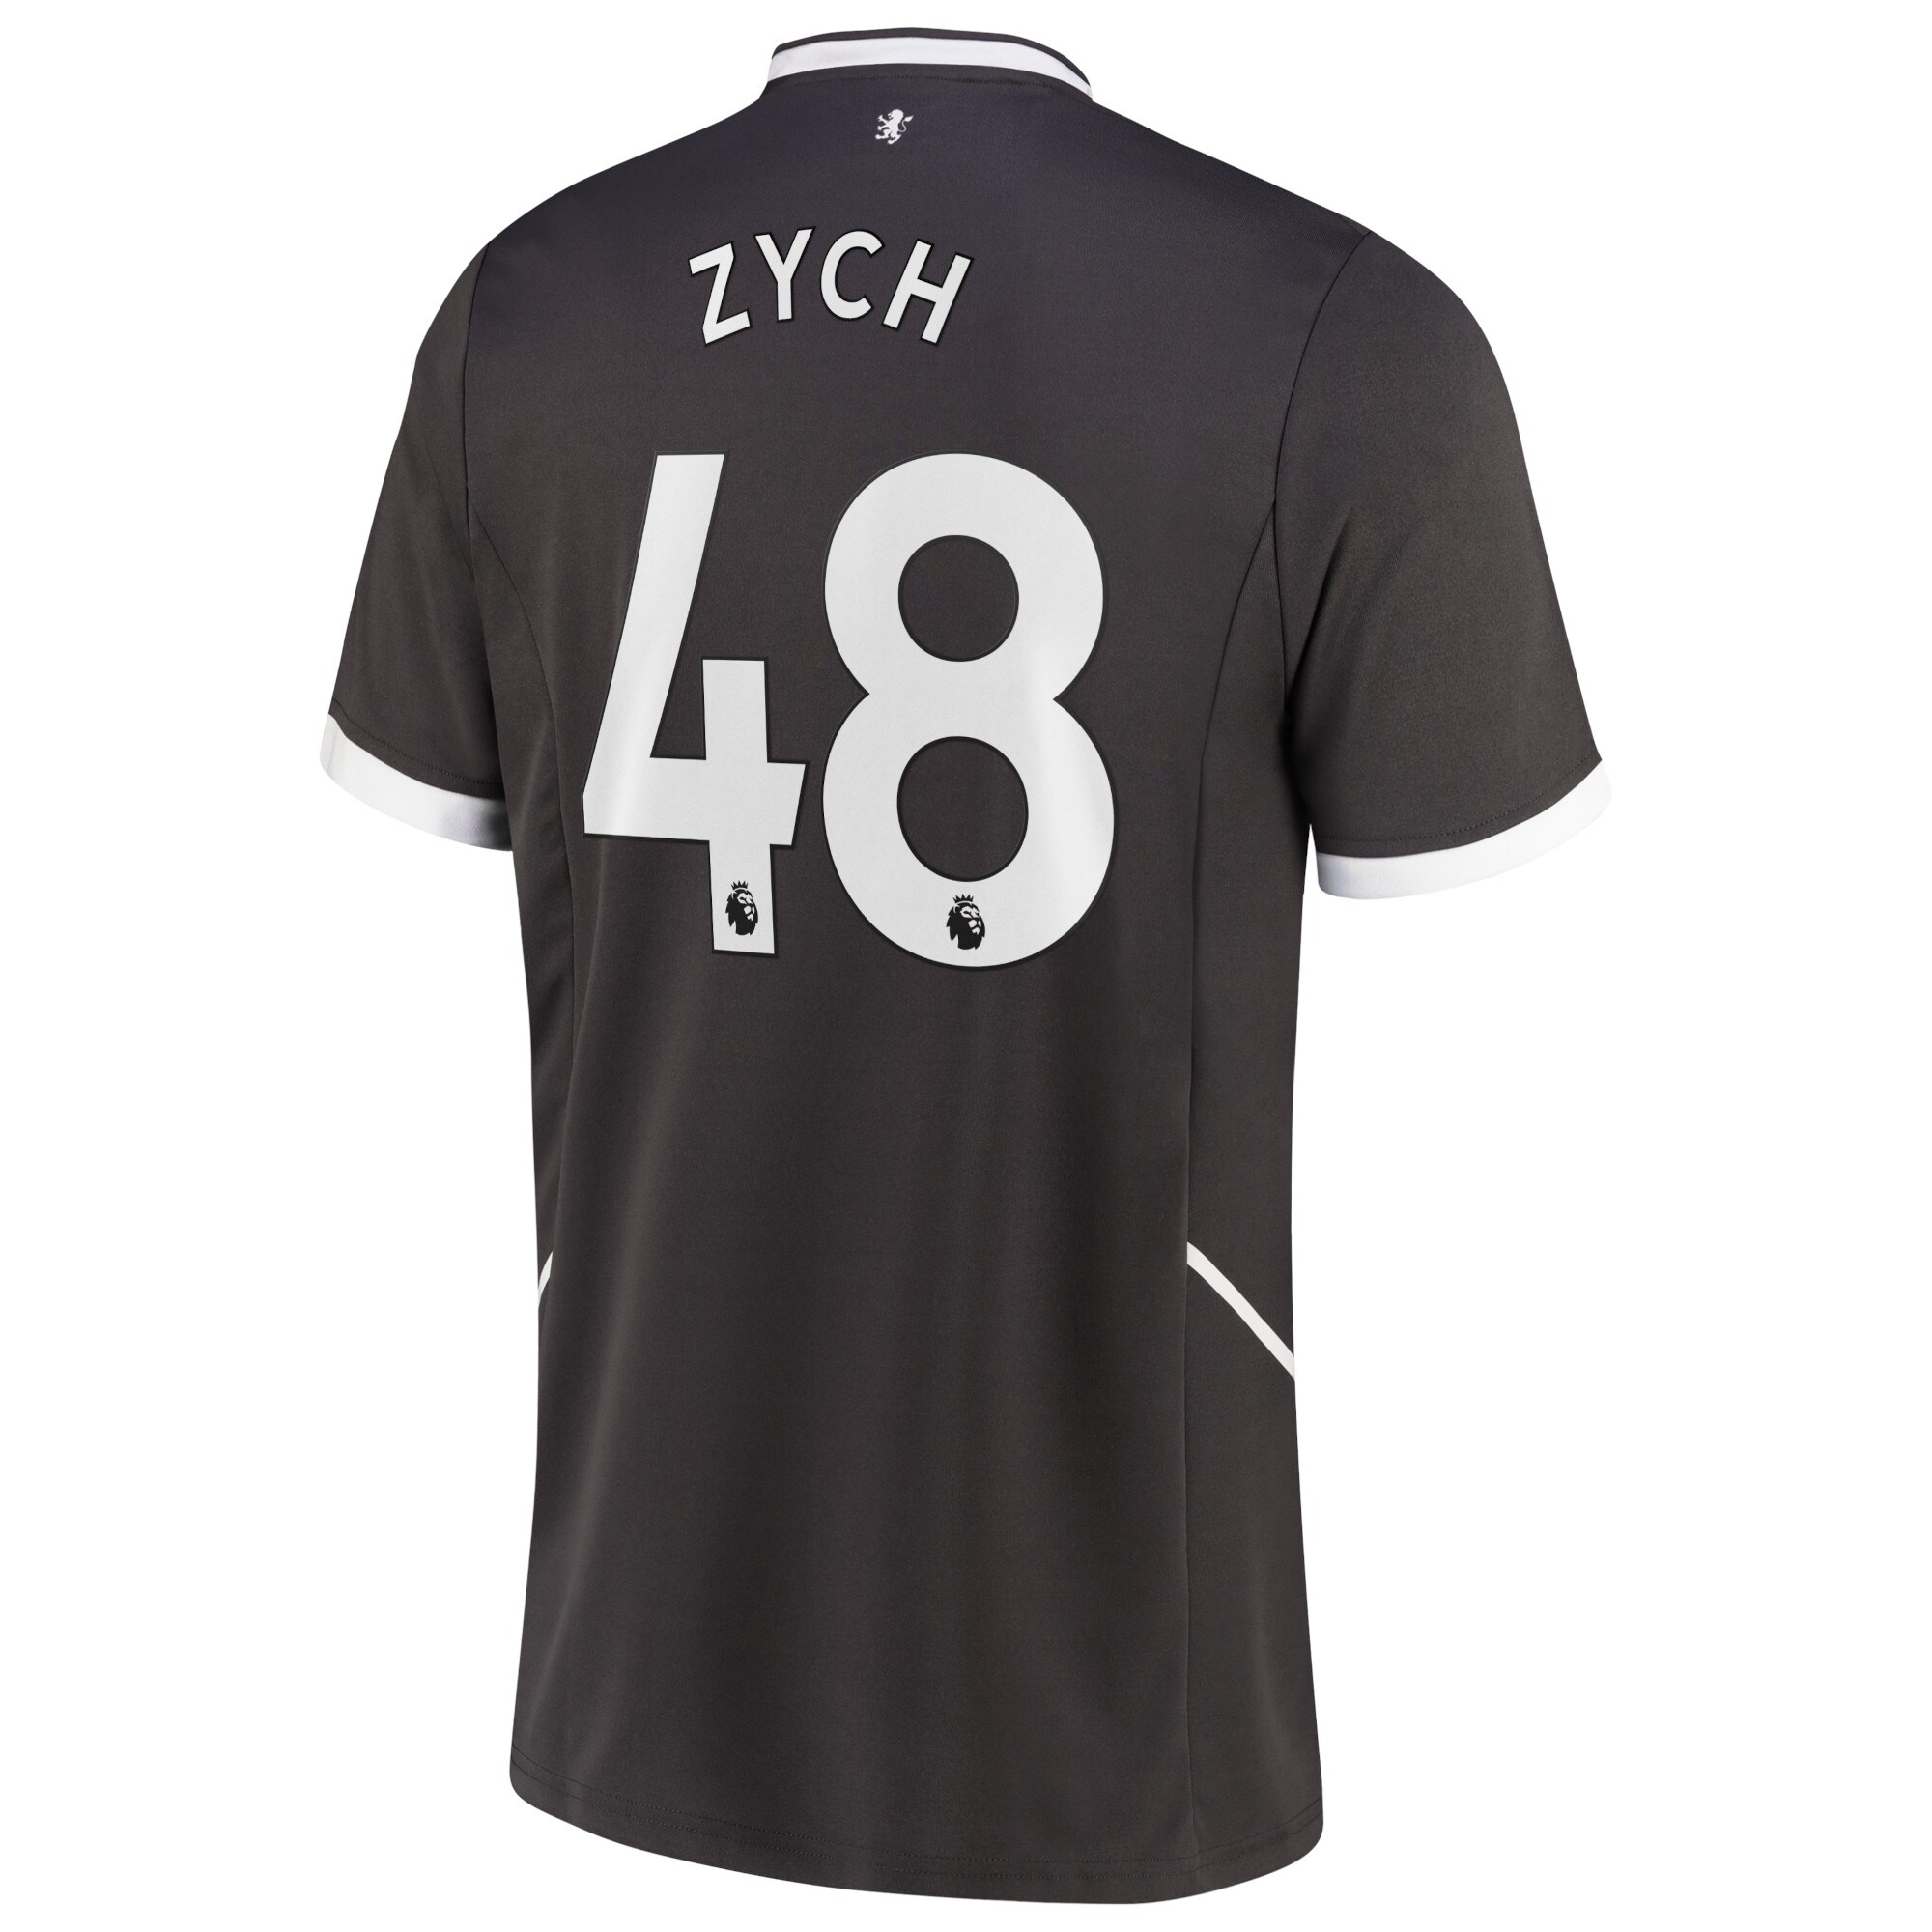 Men Aston Villa Home Shirts Goalkeeper Shirt 2022-23 Zych 48 Printing